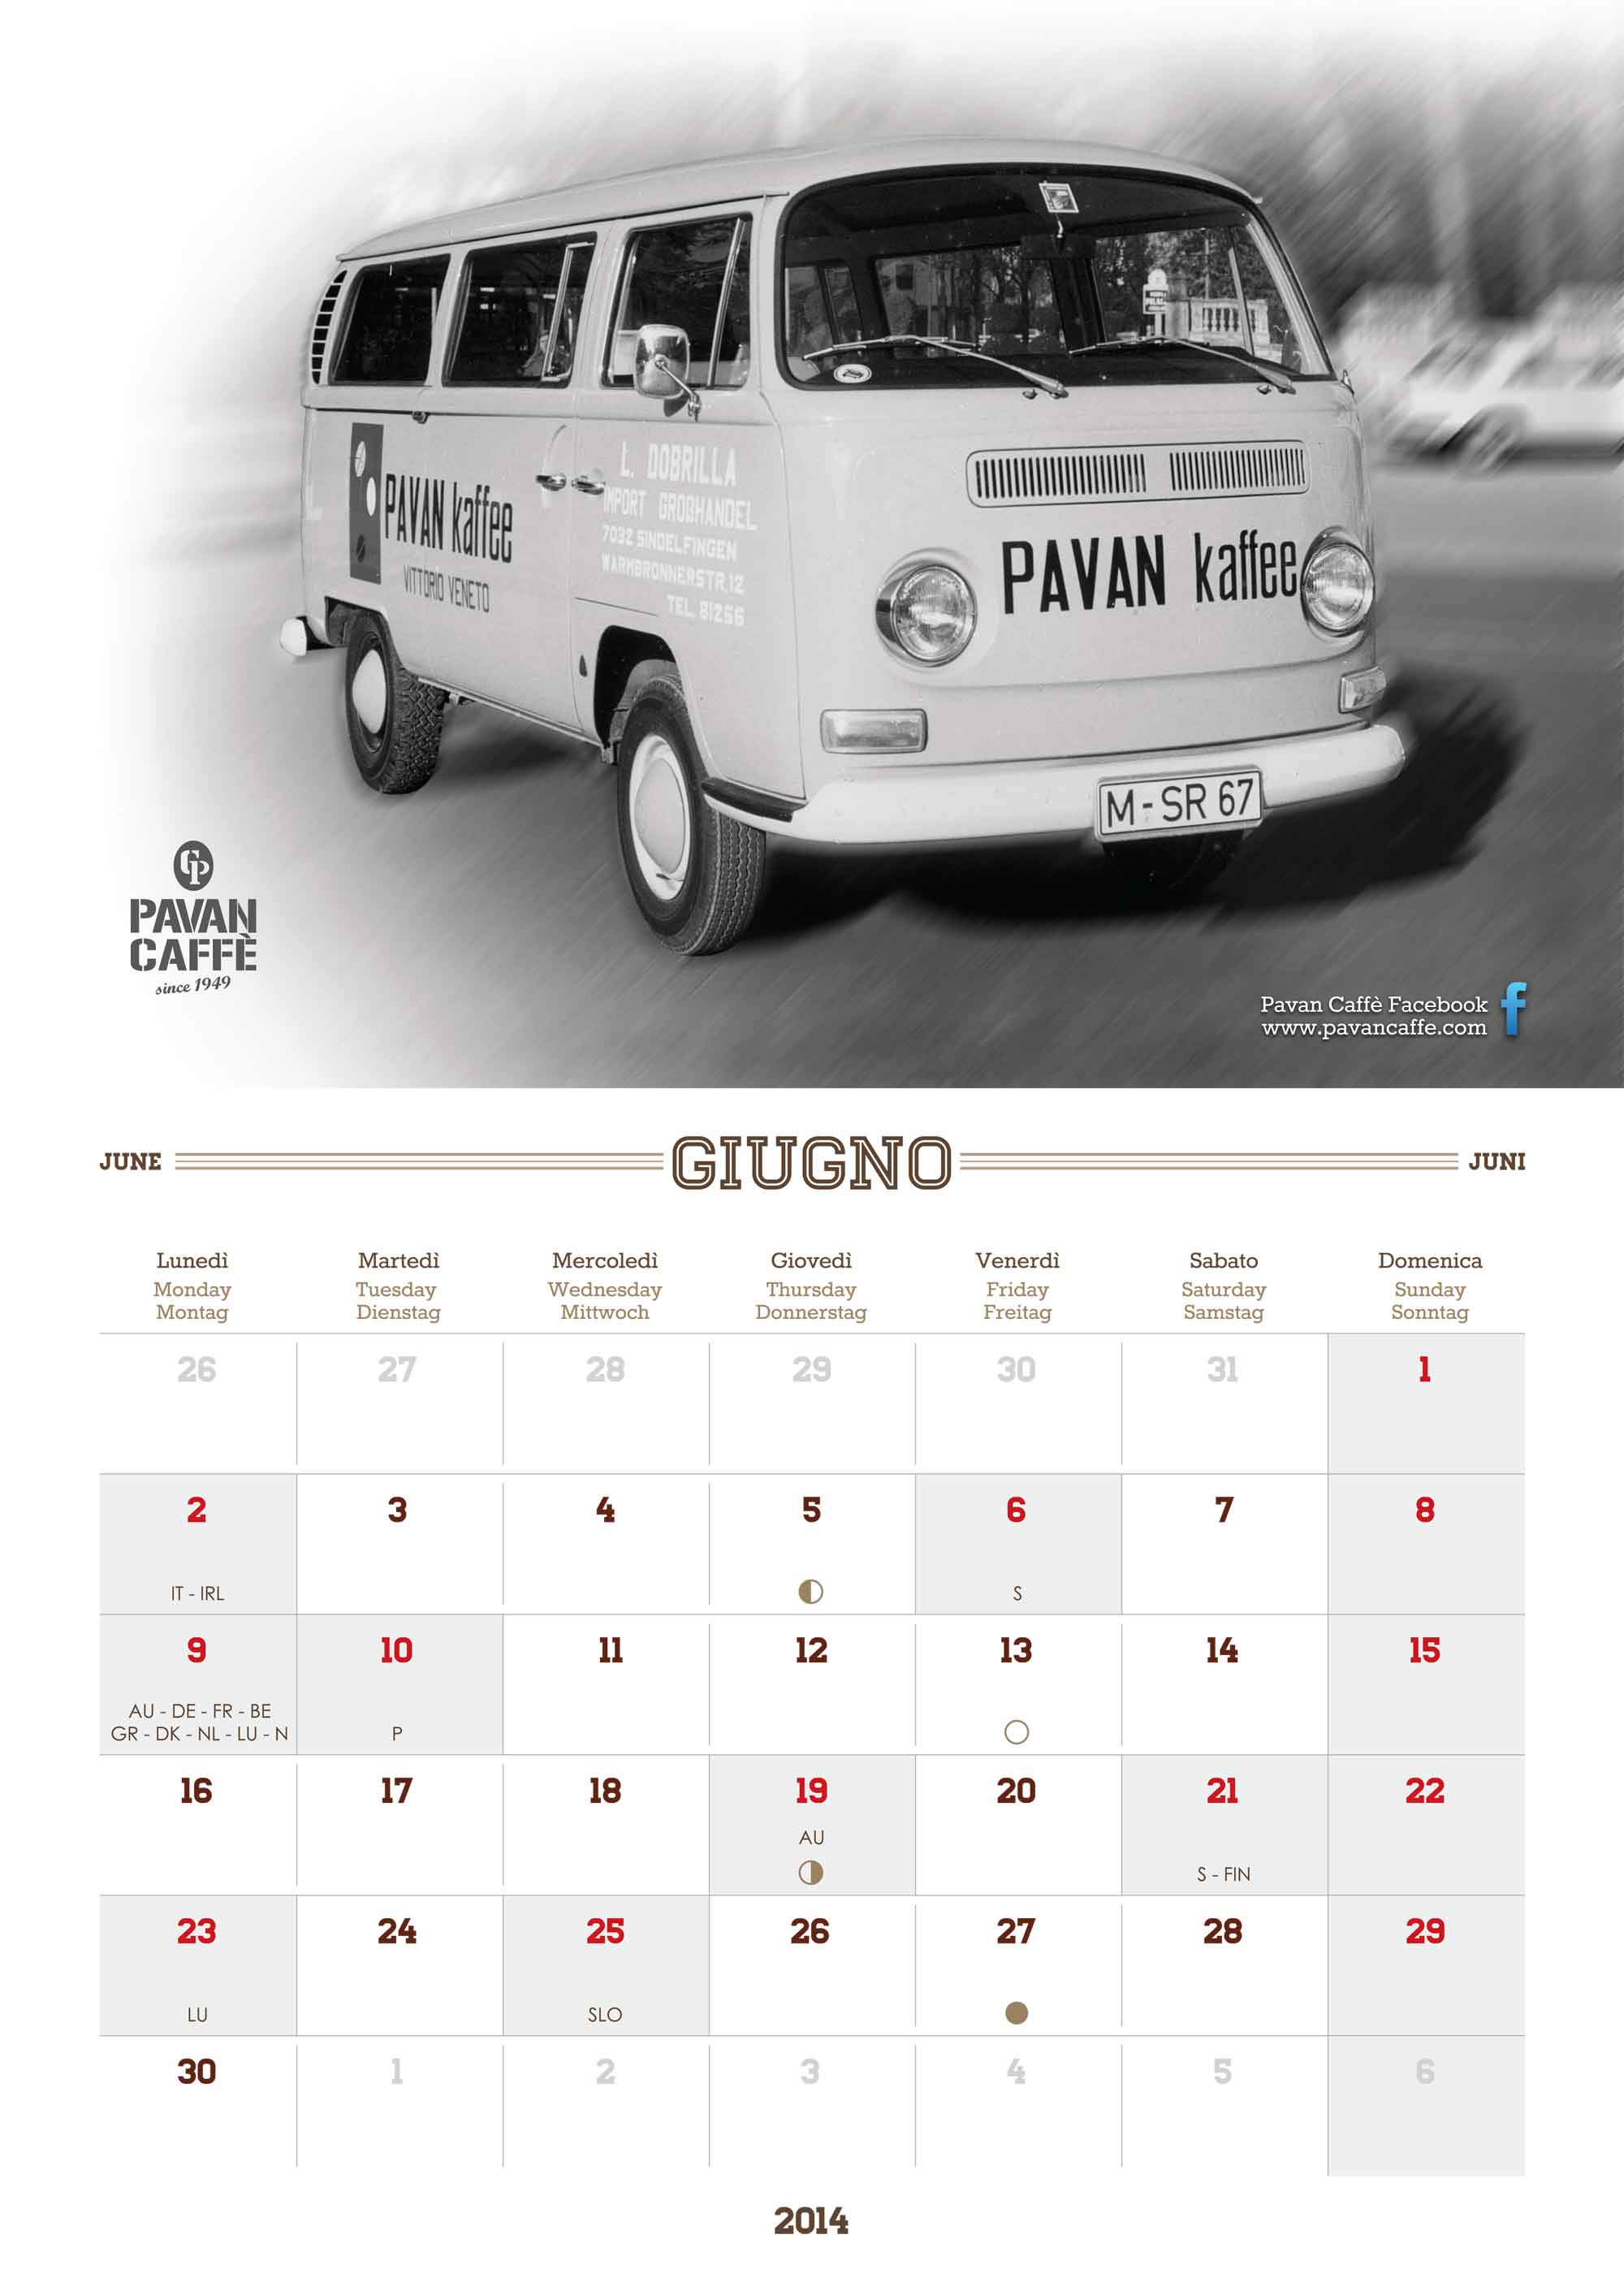 Pavan Caffè 2014 calendar June